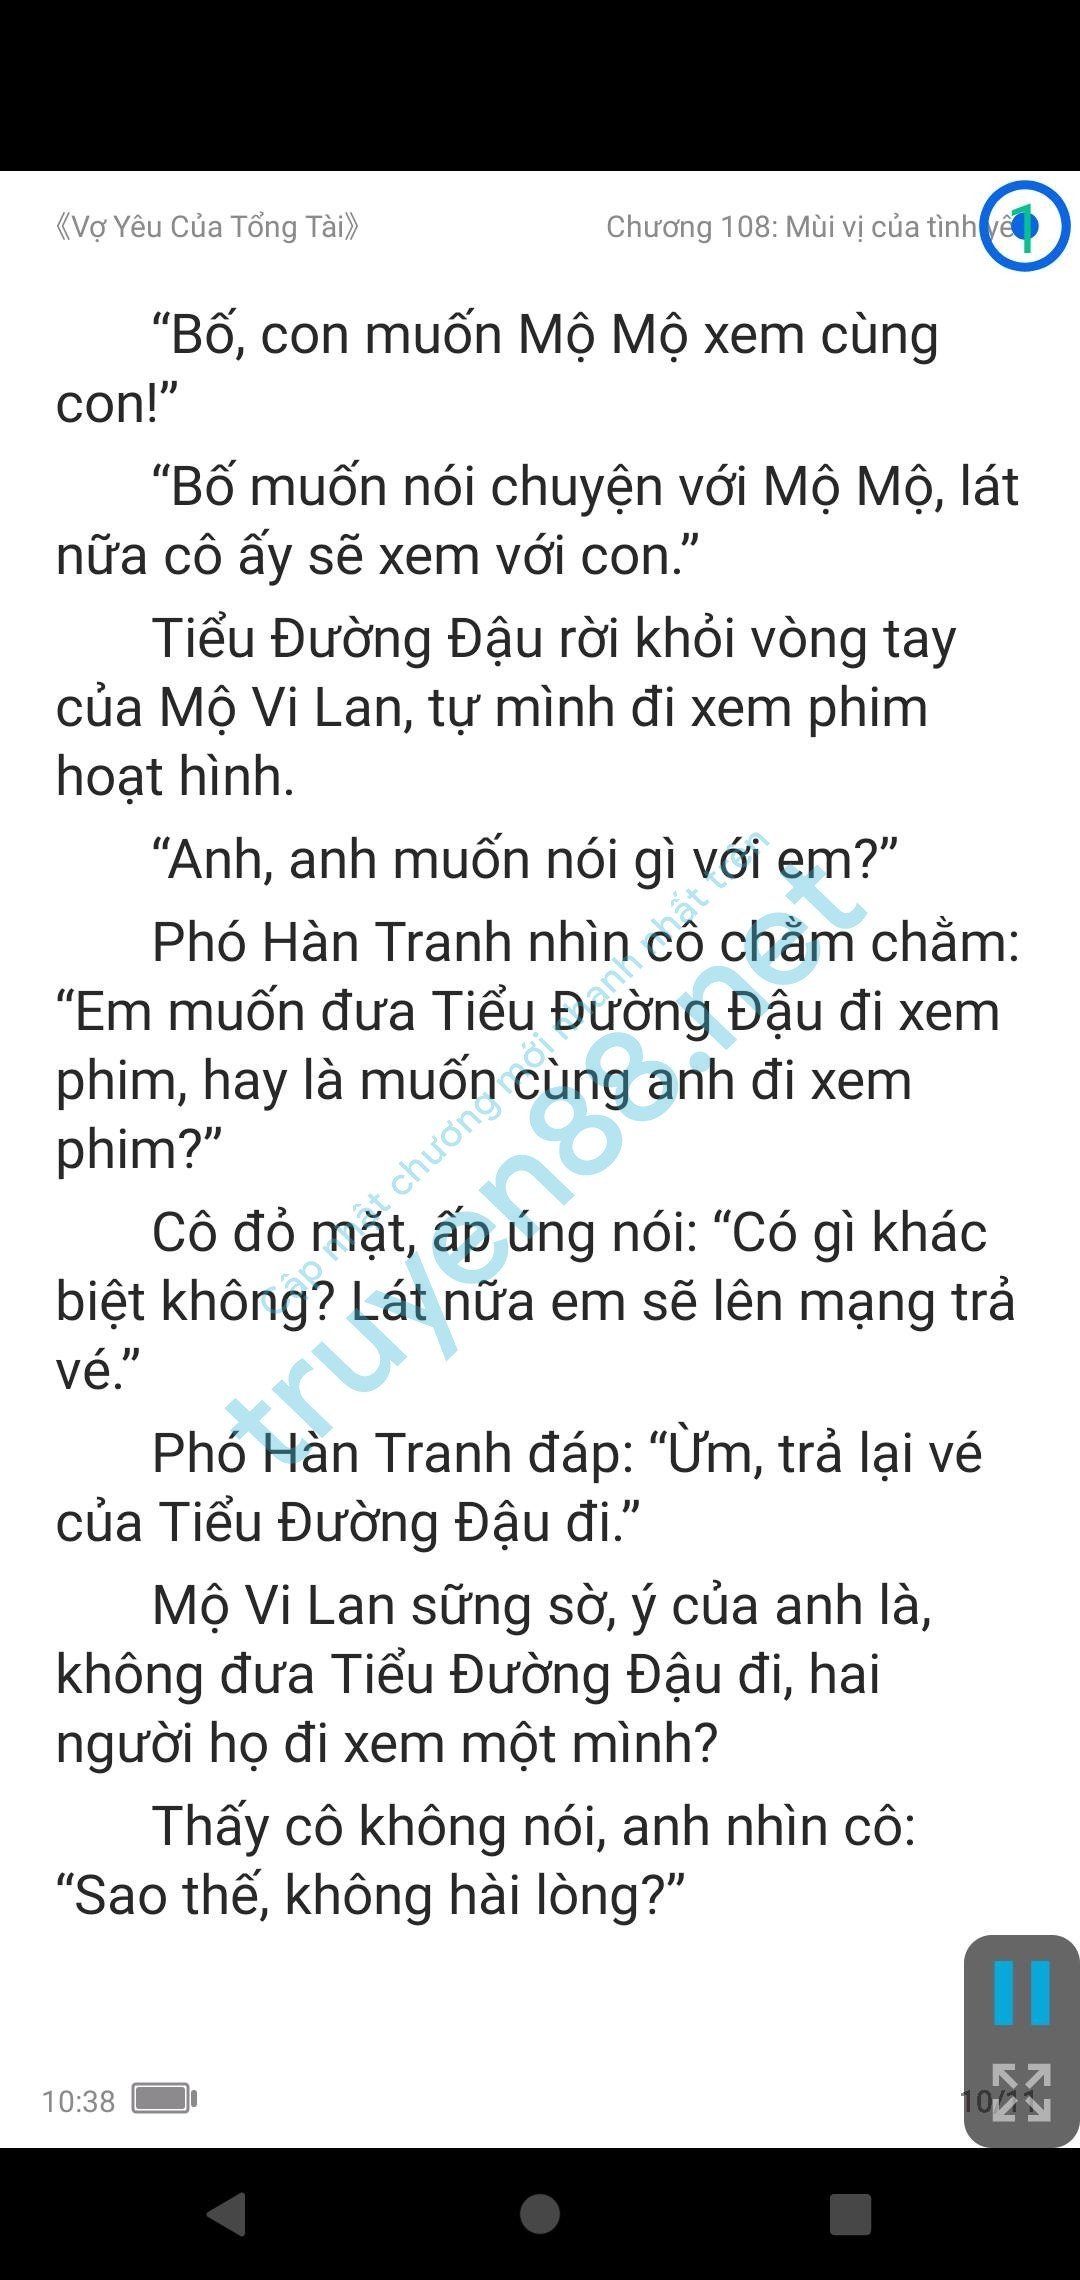 vo-yeu-cua-tong-tai-mo-vi-lan--pho-han-tranh-108-1